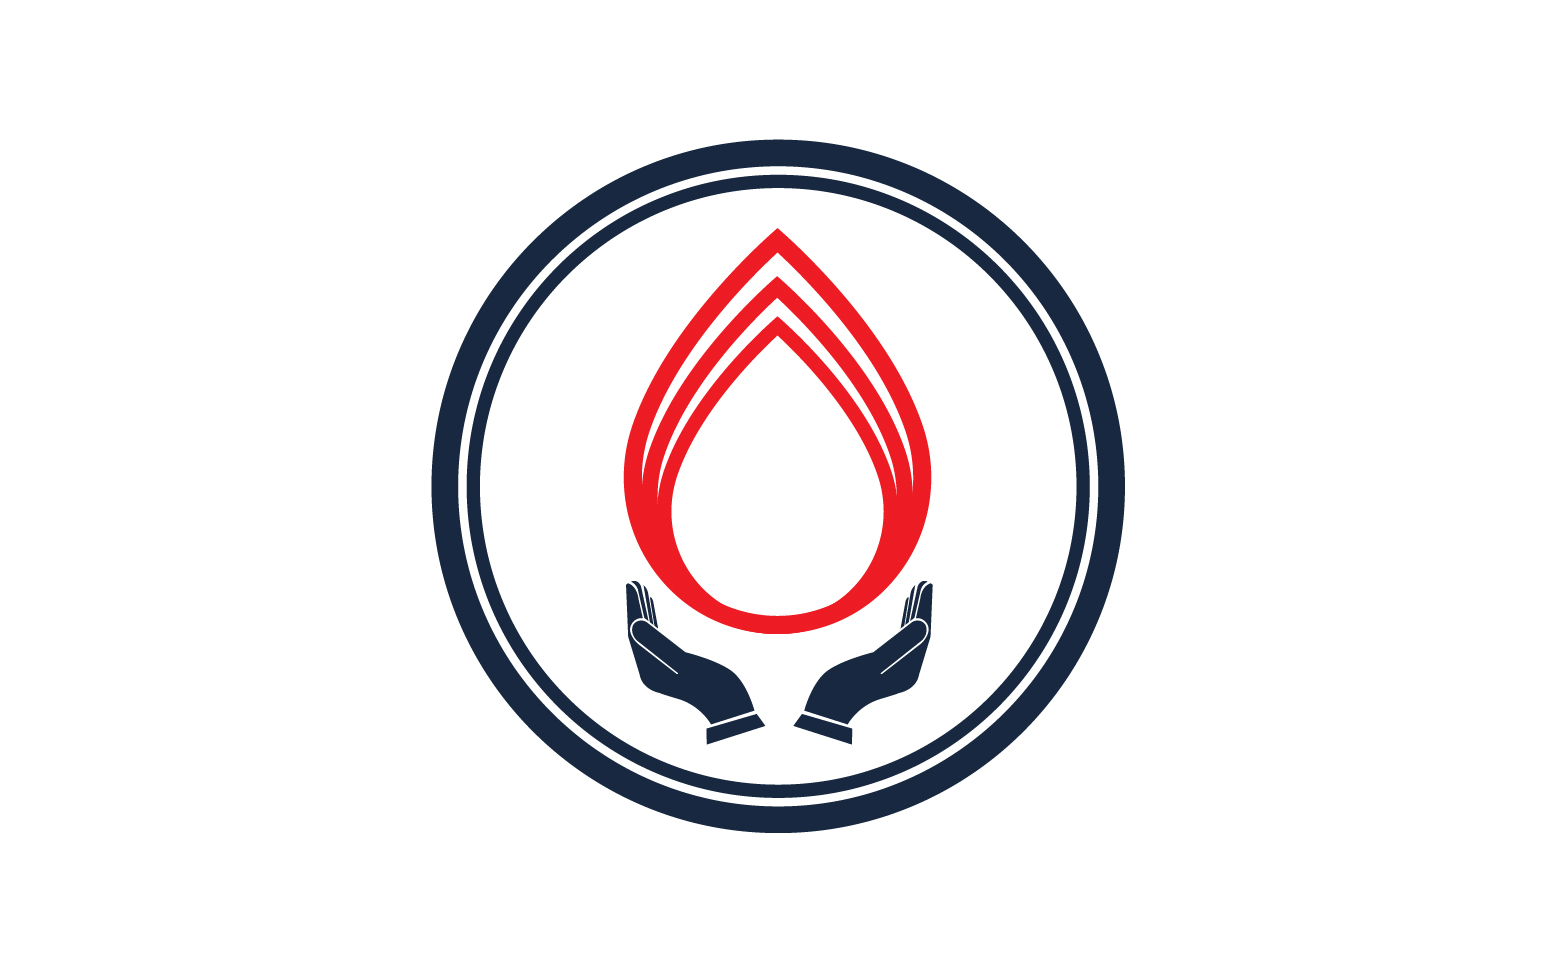 Blood drop icon logo template version v41